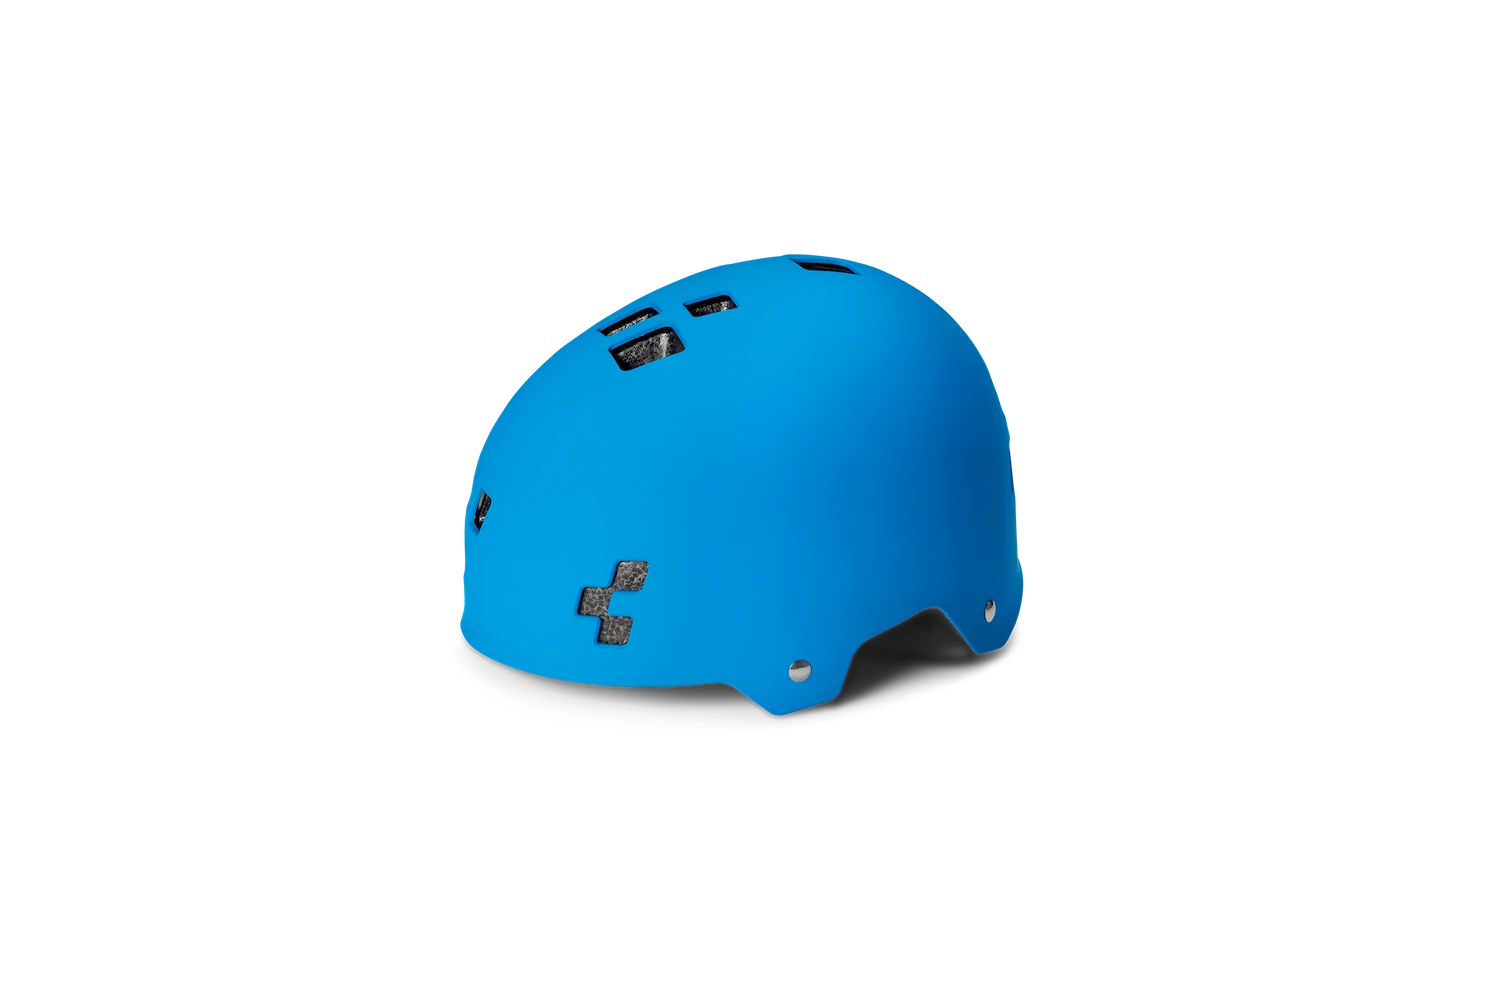 CUBE Helm DIRT (blue)